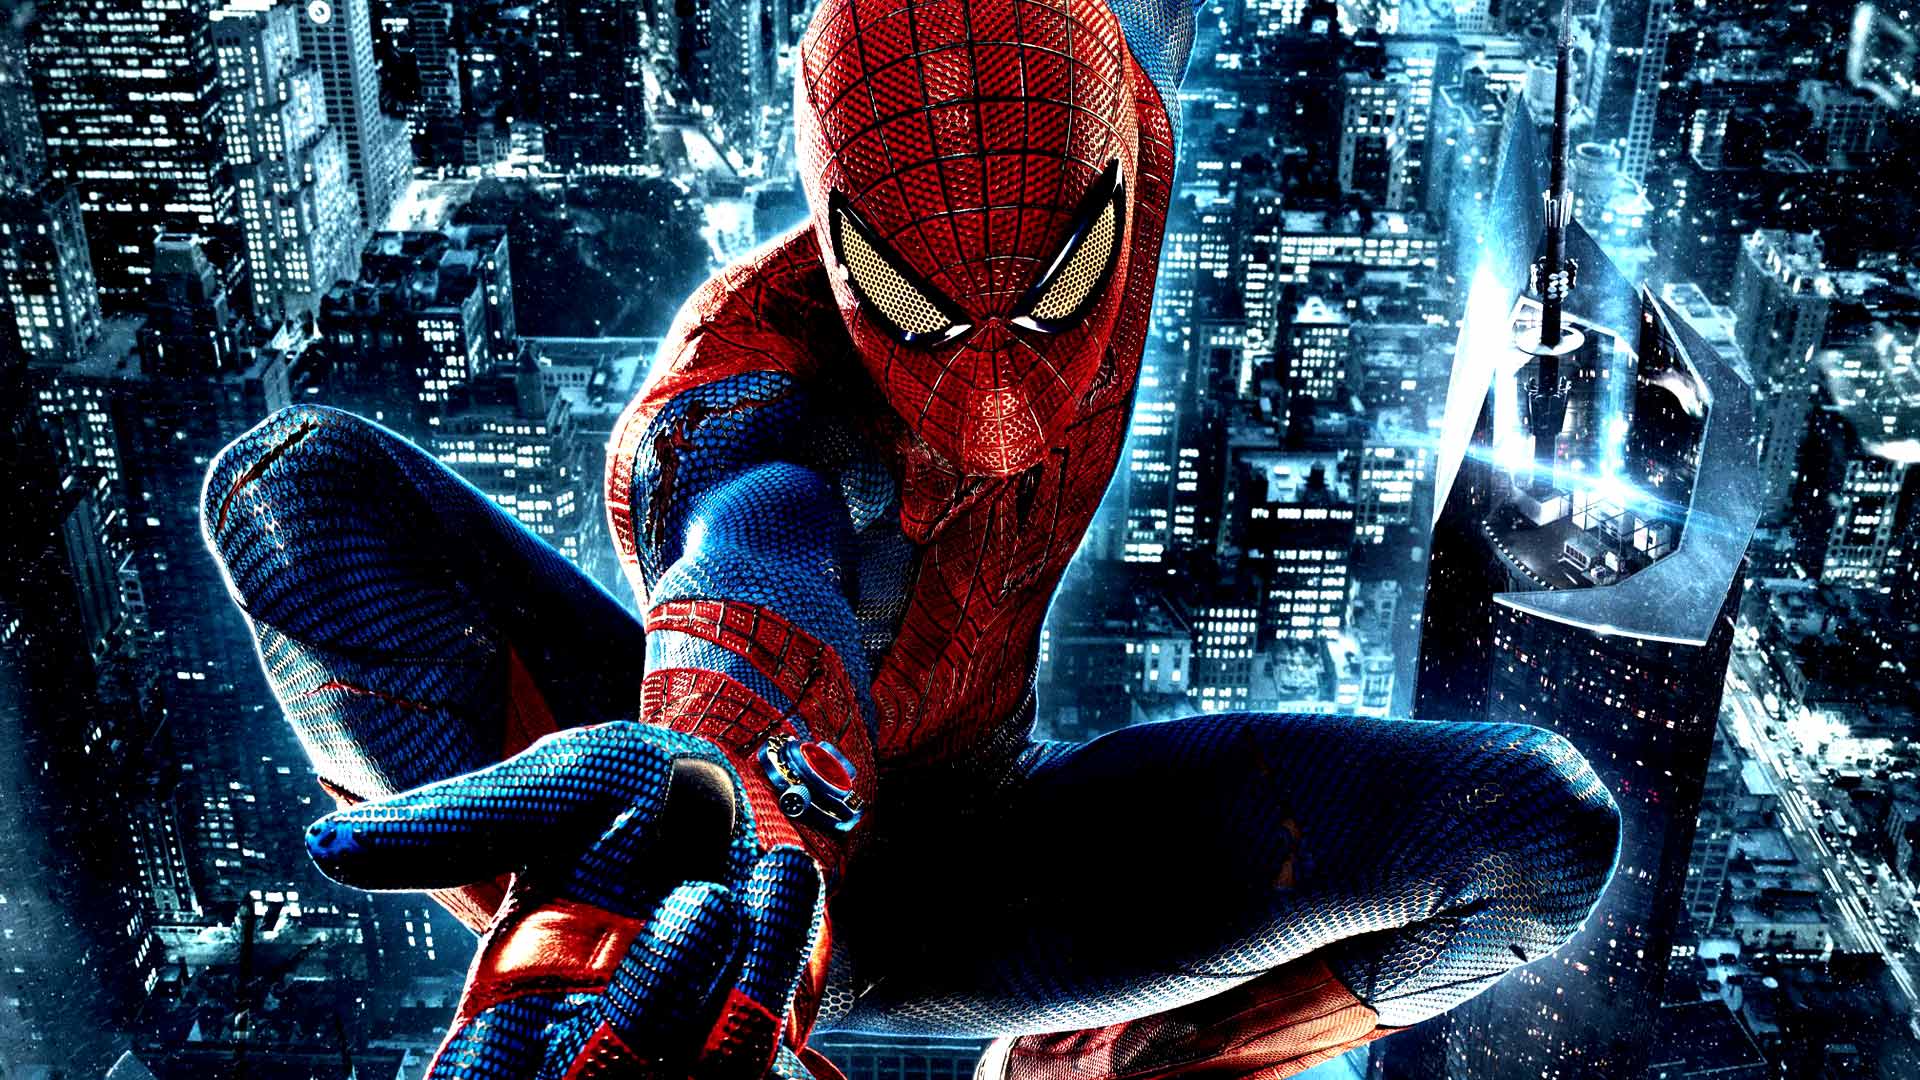 the amazing spider man 2 fondo de pantalla hd,hombre araña,superhéroe,personaje de ficción,hombre murciélago,cg artwork